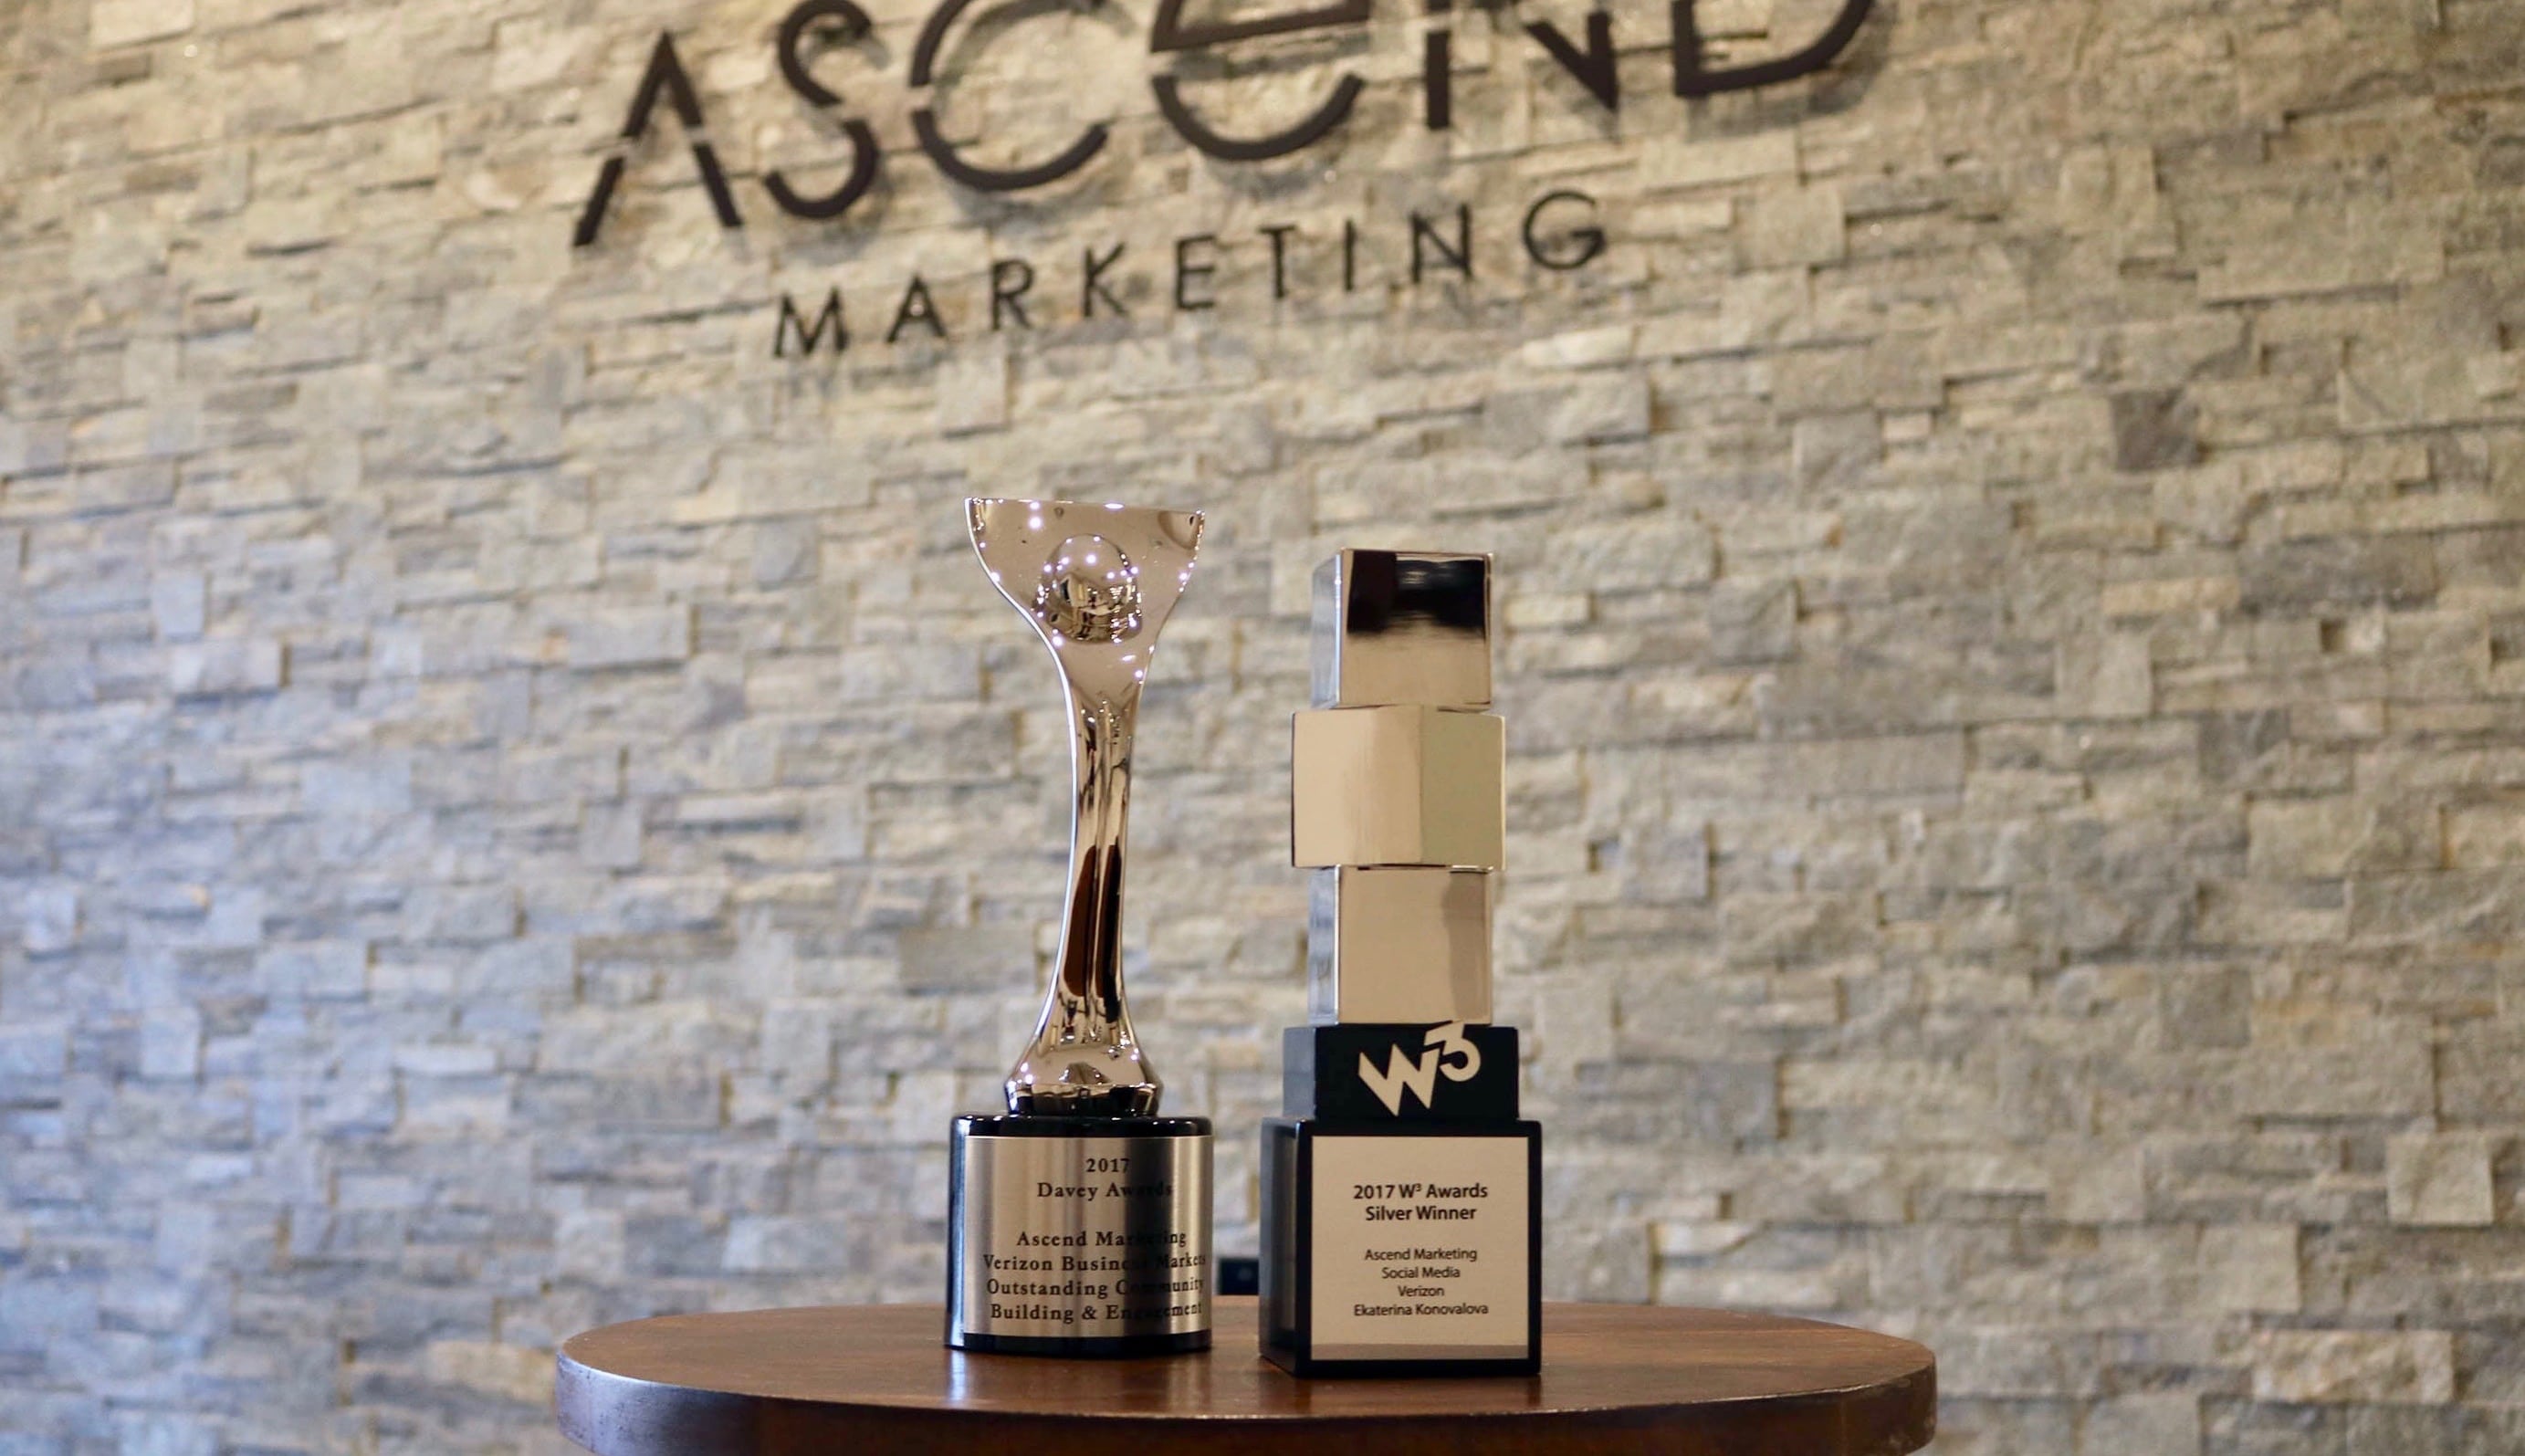 Ascend Marketing wins W3 and davey awards 2017